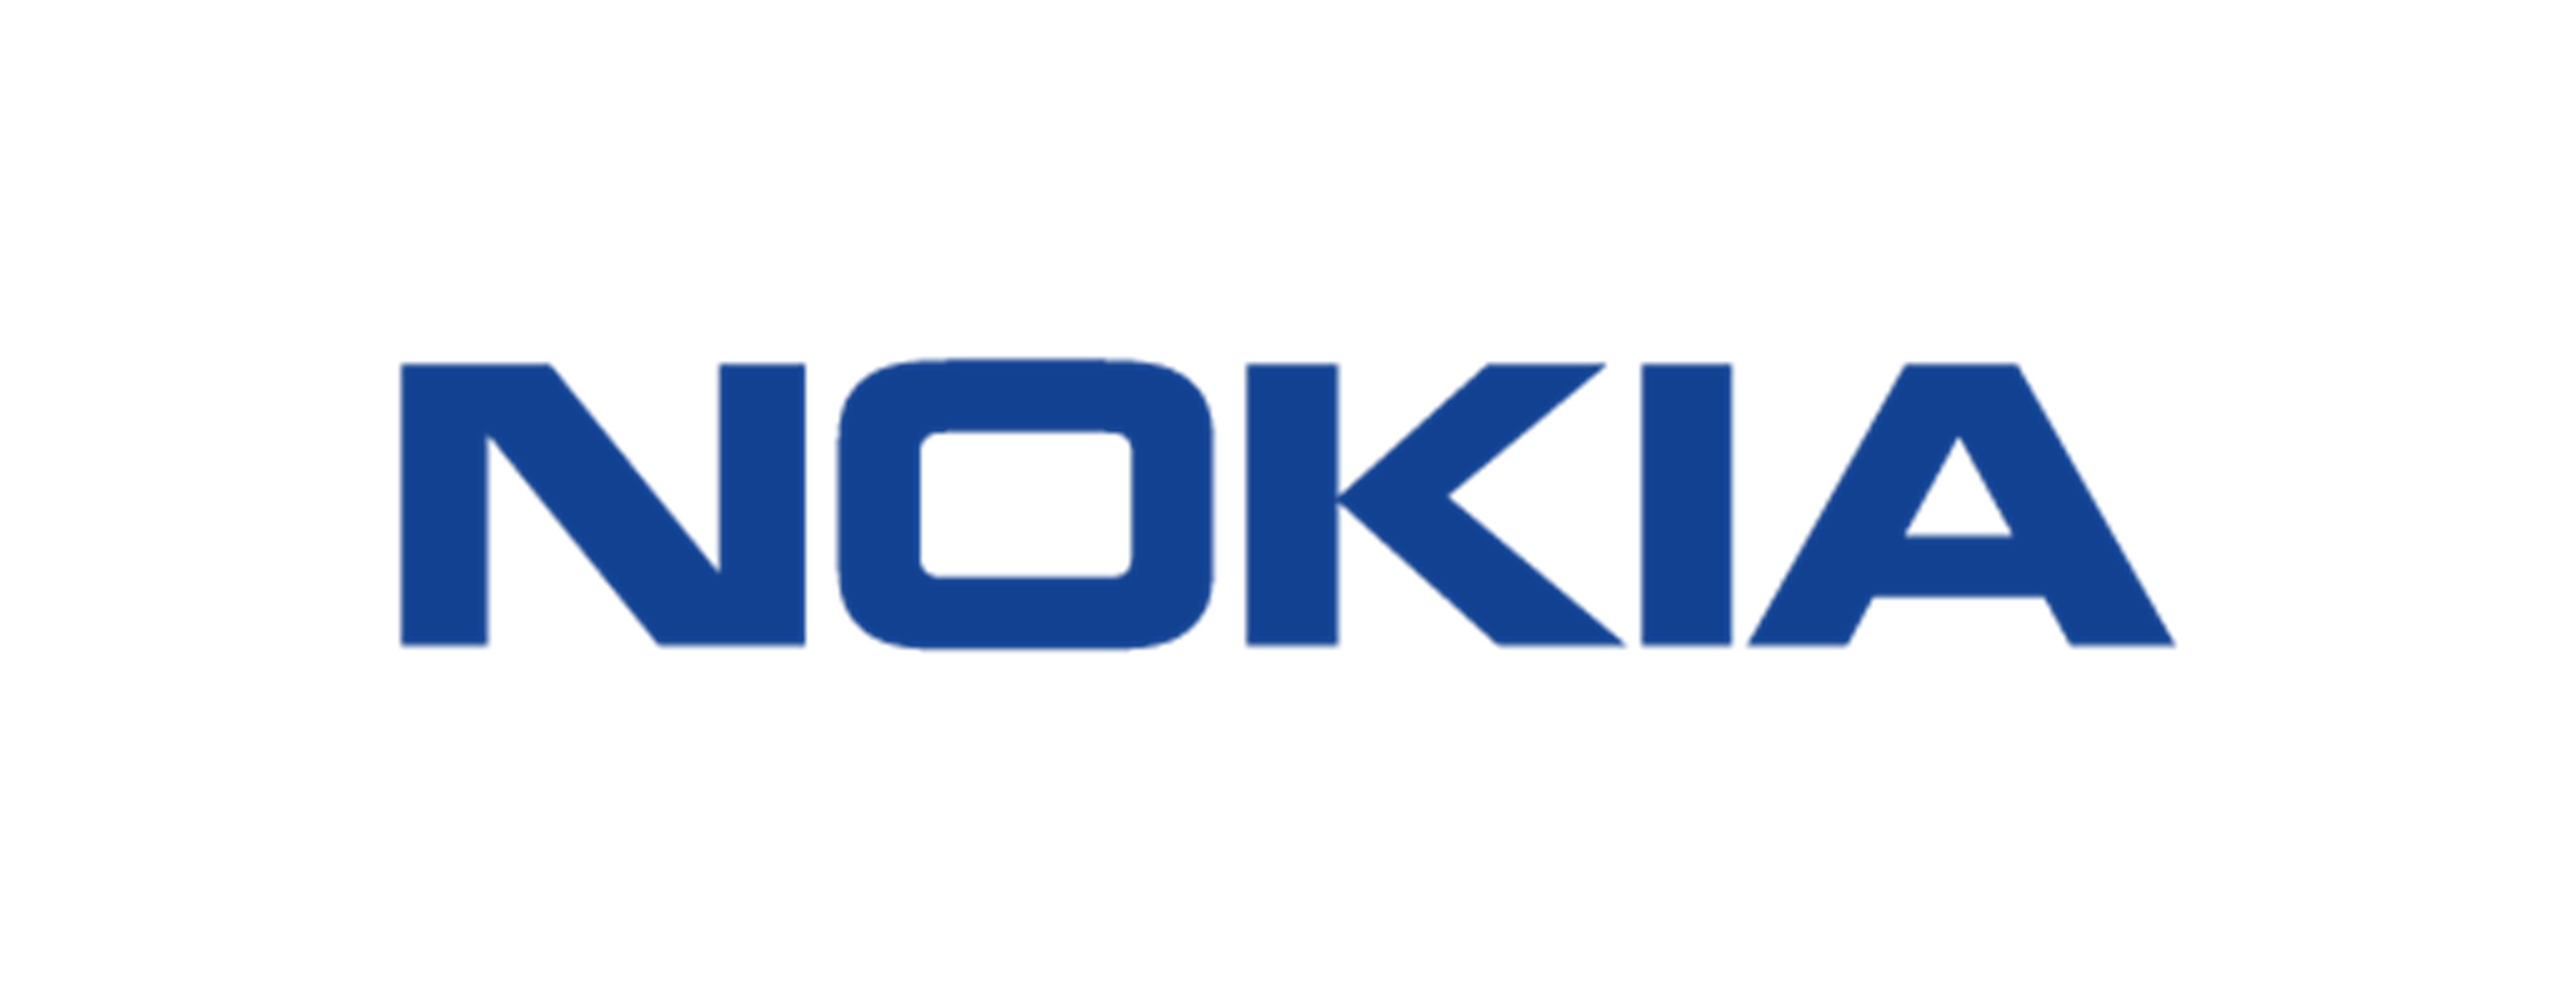 
            Logo de Nokia
        